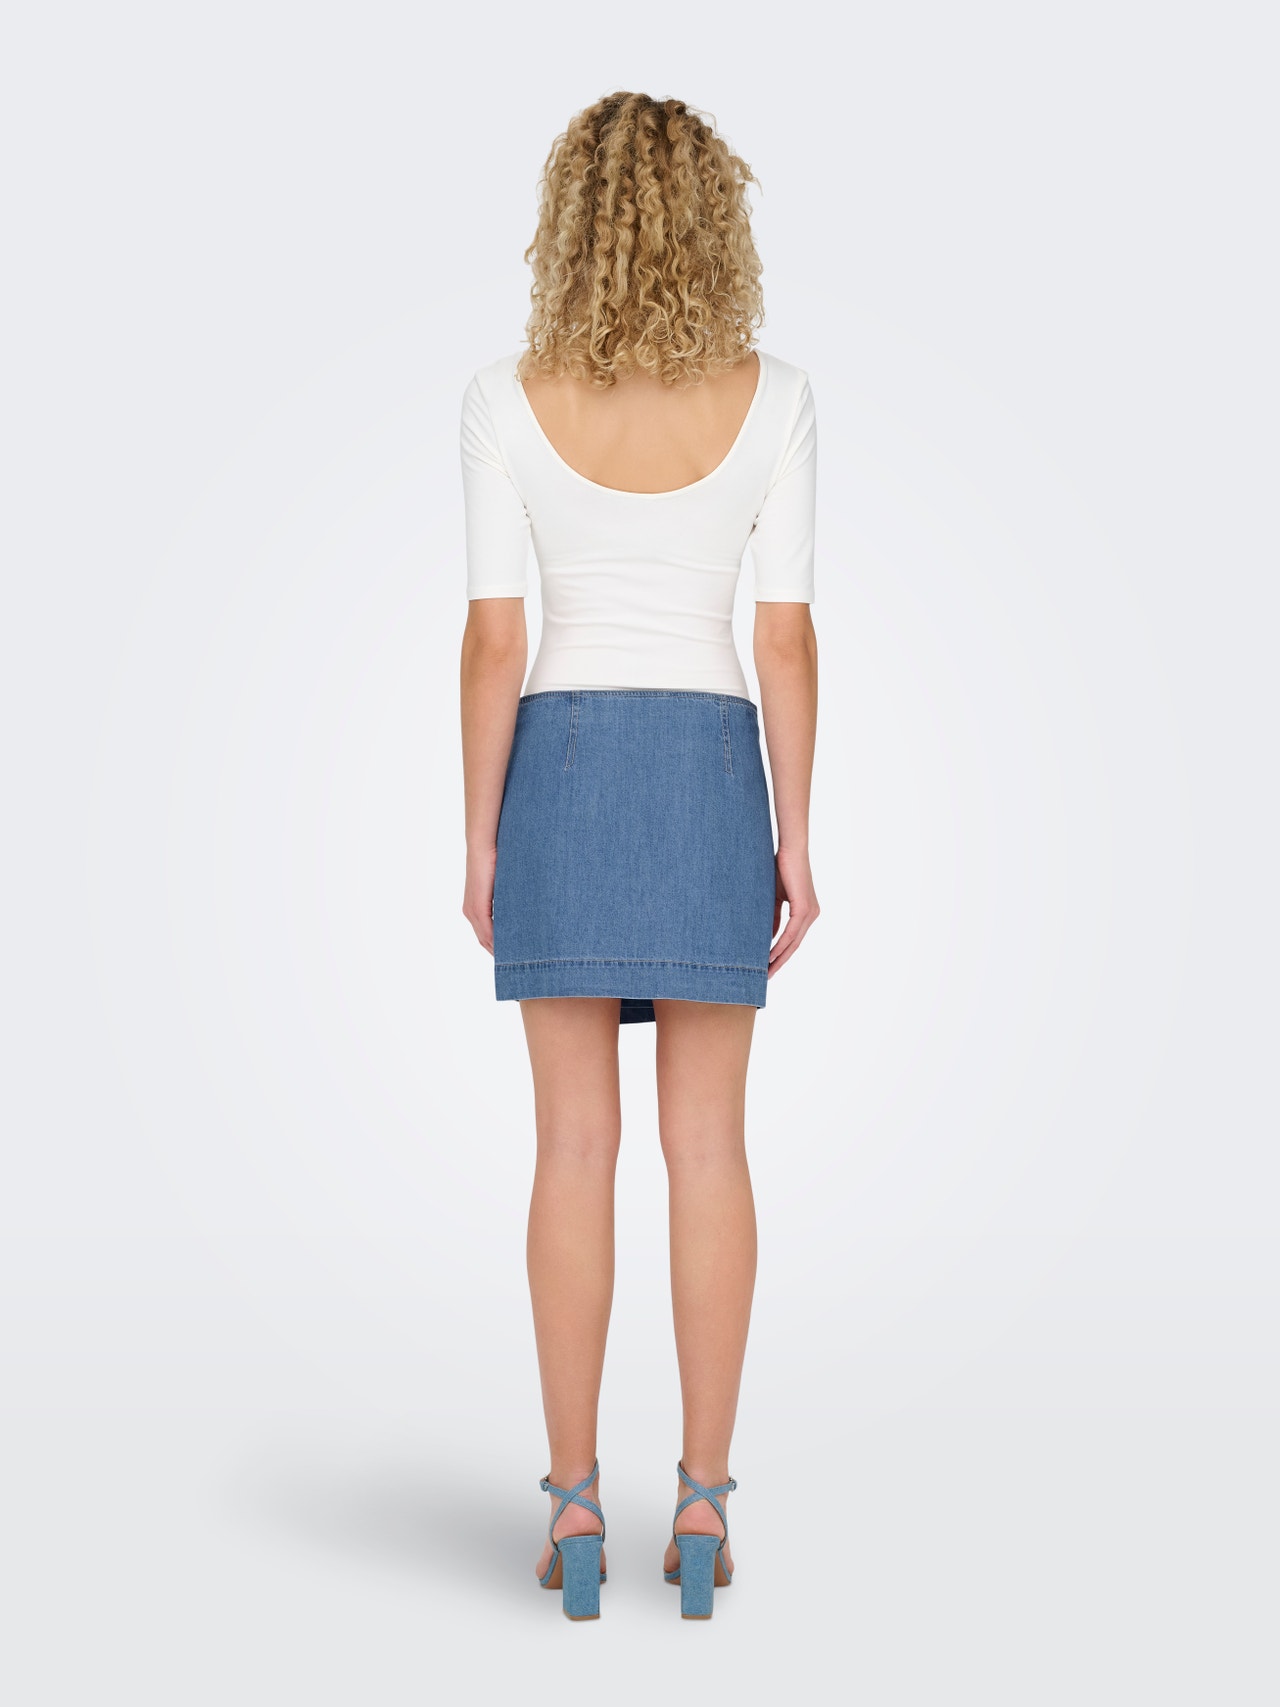 ONLY Mid waist Short skirt -Medium Blue Denim - 15319423